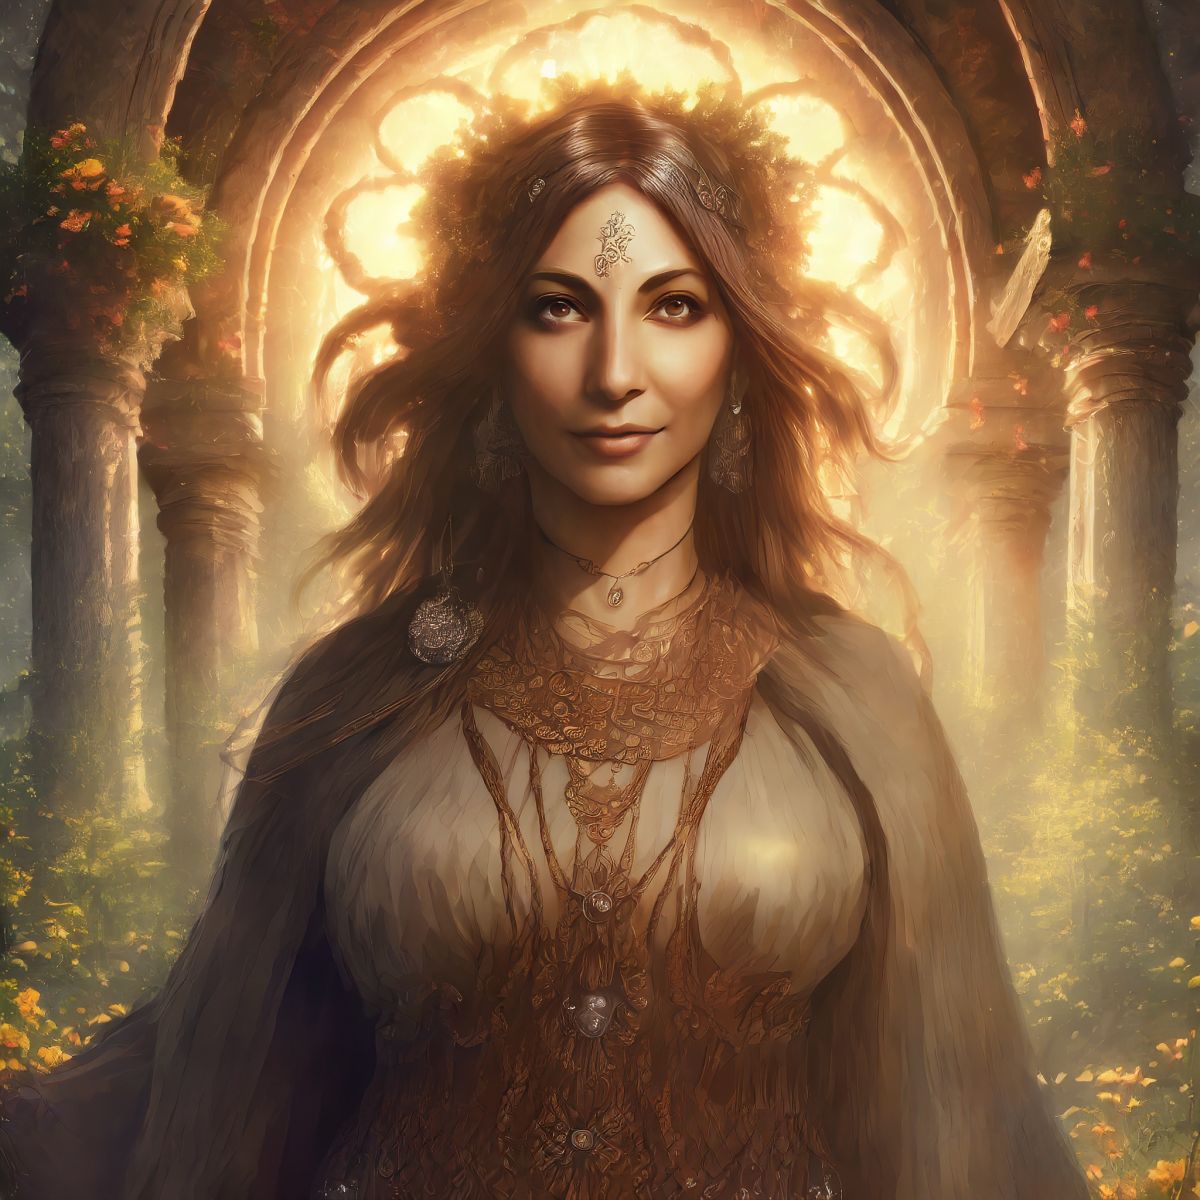 A portrait of the Goddess Lachesis Moirai.